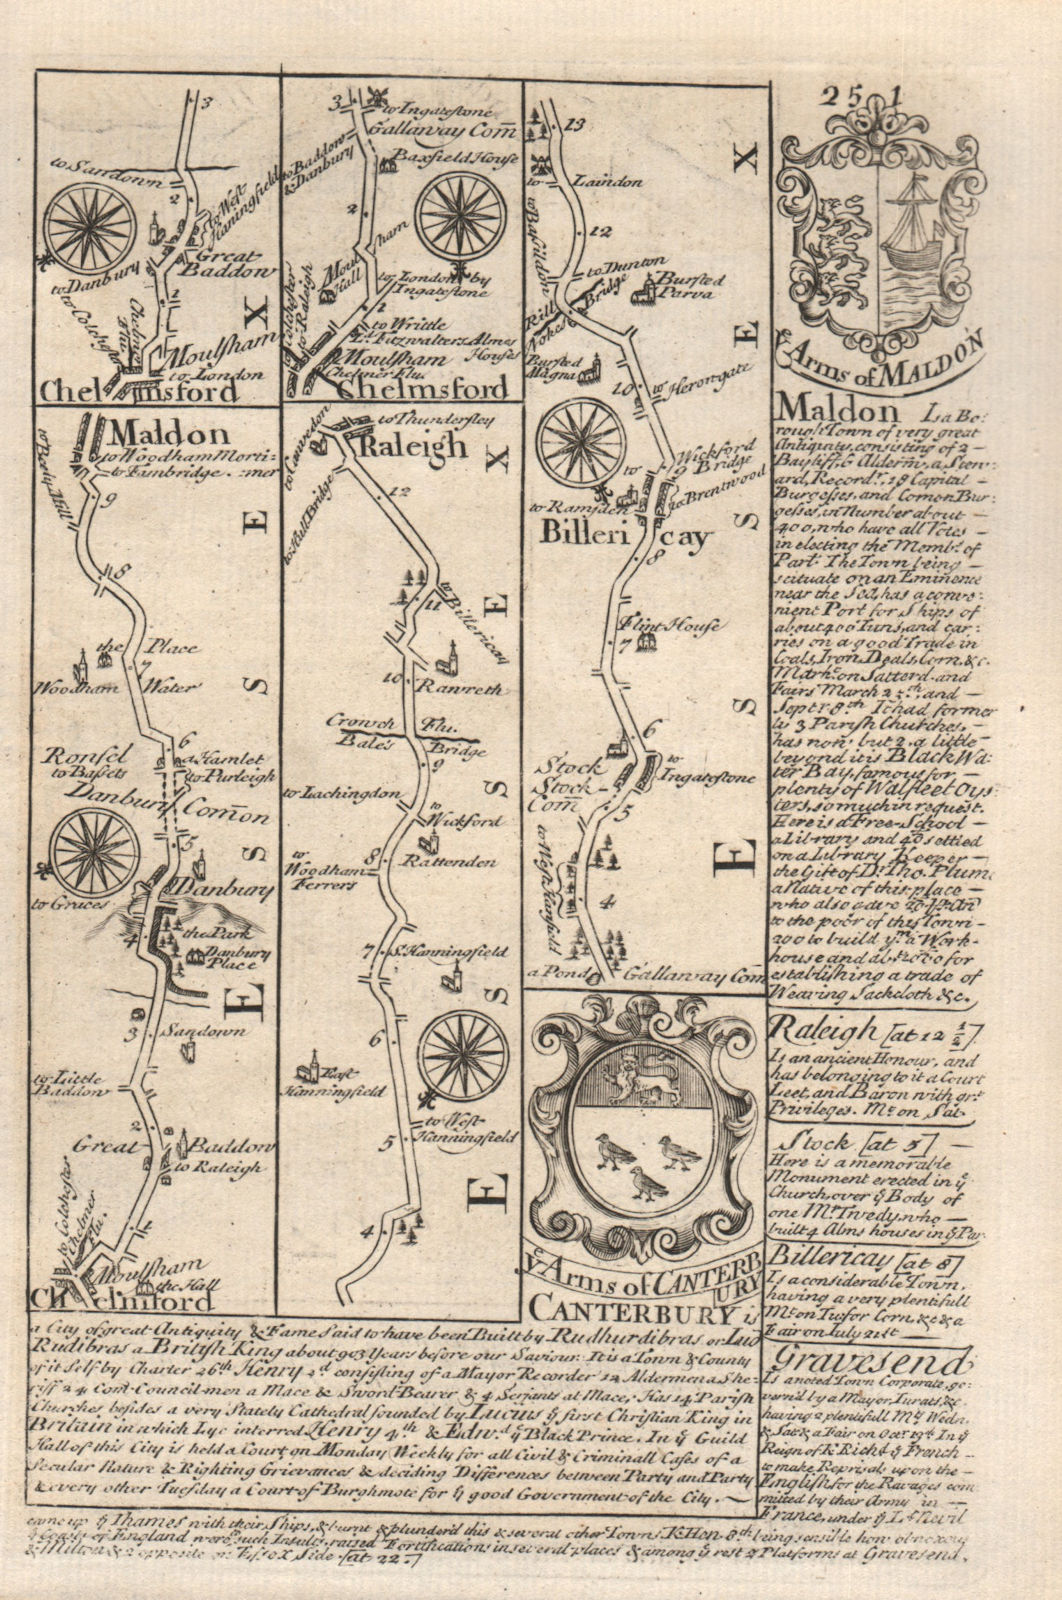 Chelmsford-Maldon-Rayleigh-Billericay road map by J. OWEN & E. BOWEN 1753